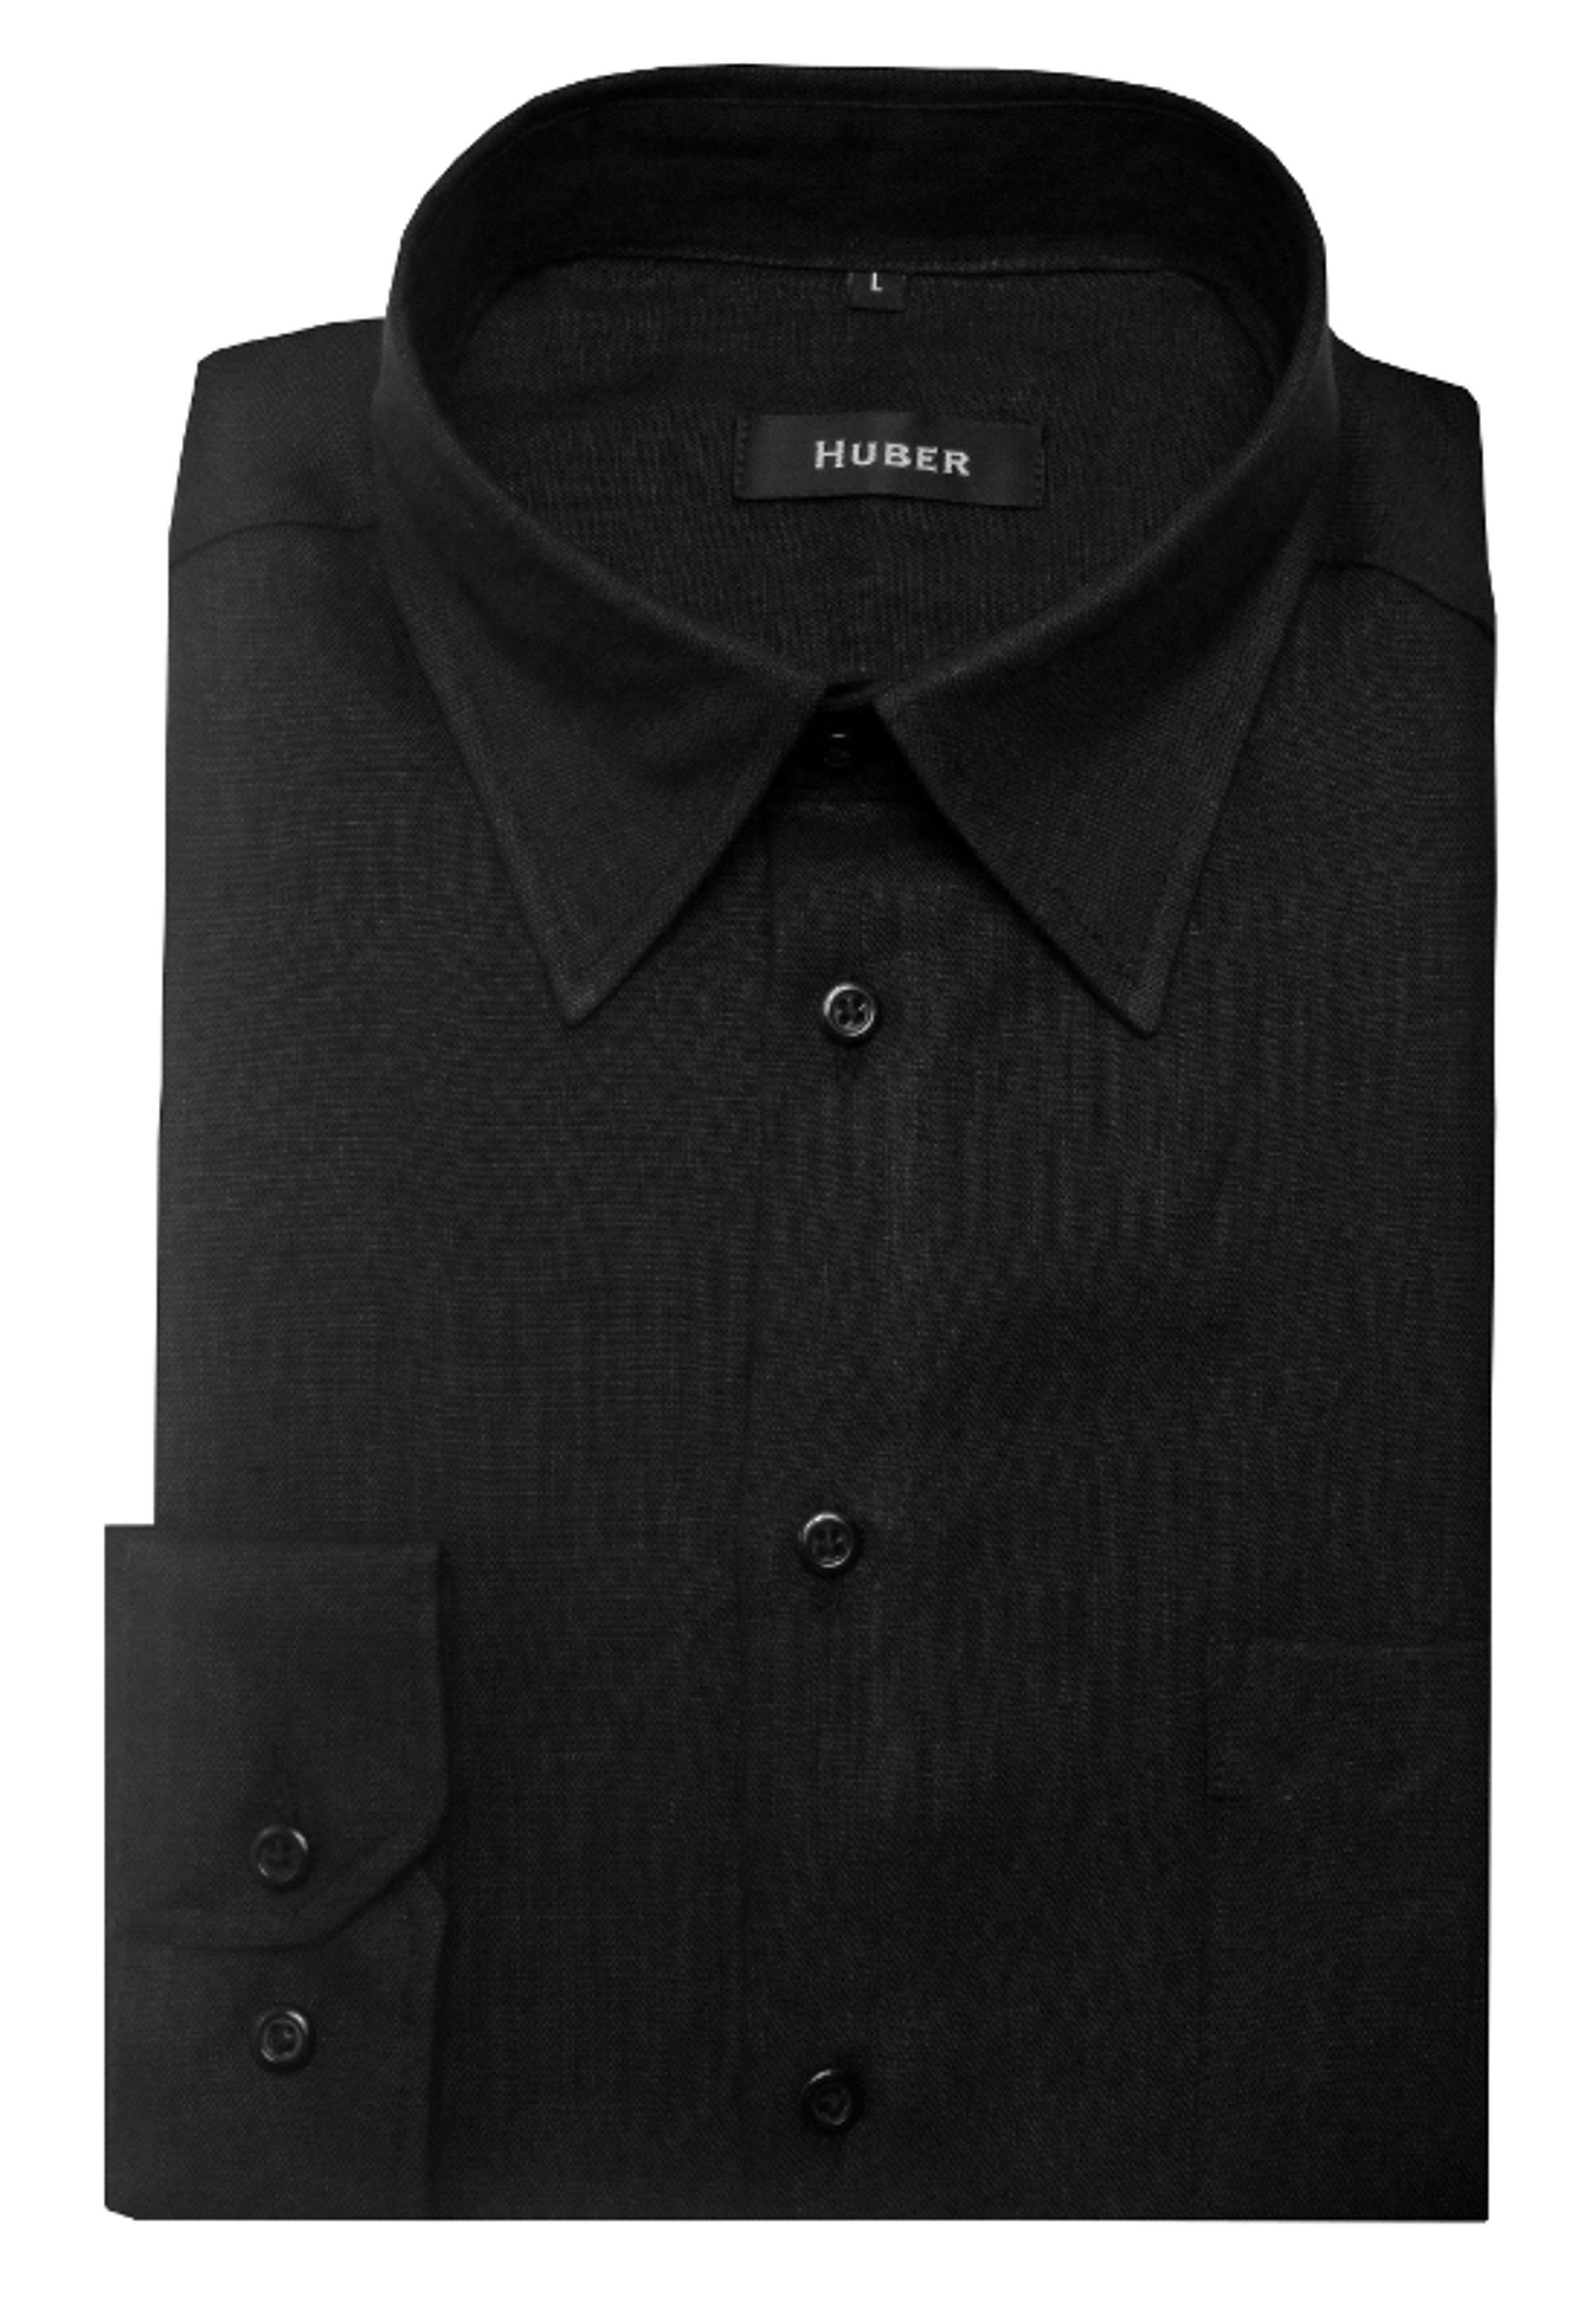 Huber Hemden Langarmhemd HU-0053 Kentkragen, 100% Leinen nachhaltige Naturfaser Regular Made in EU! schwarz